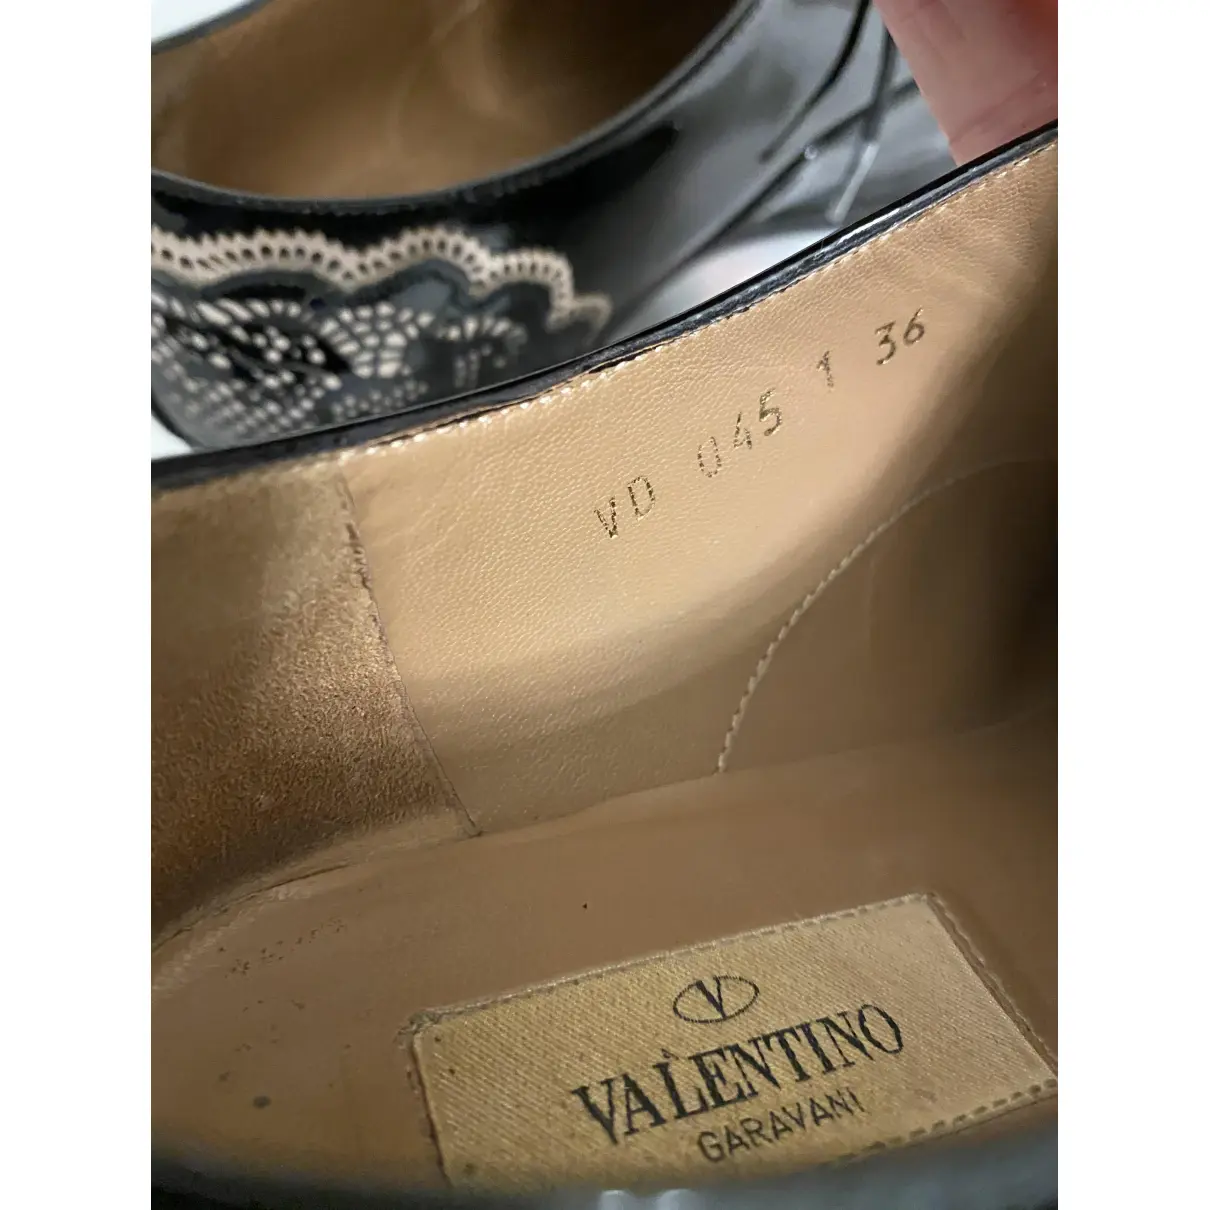 Patent leather lace ups Valentino Garavani